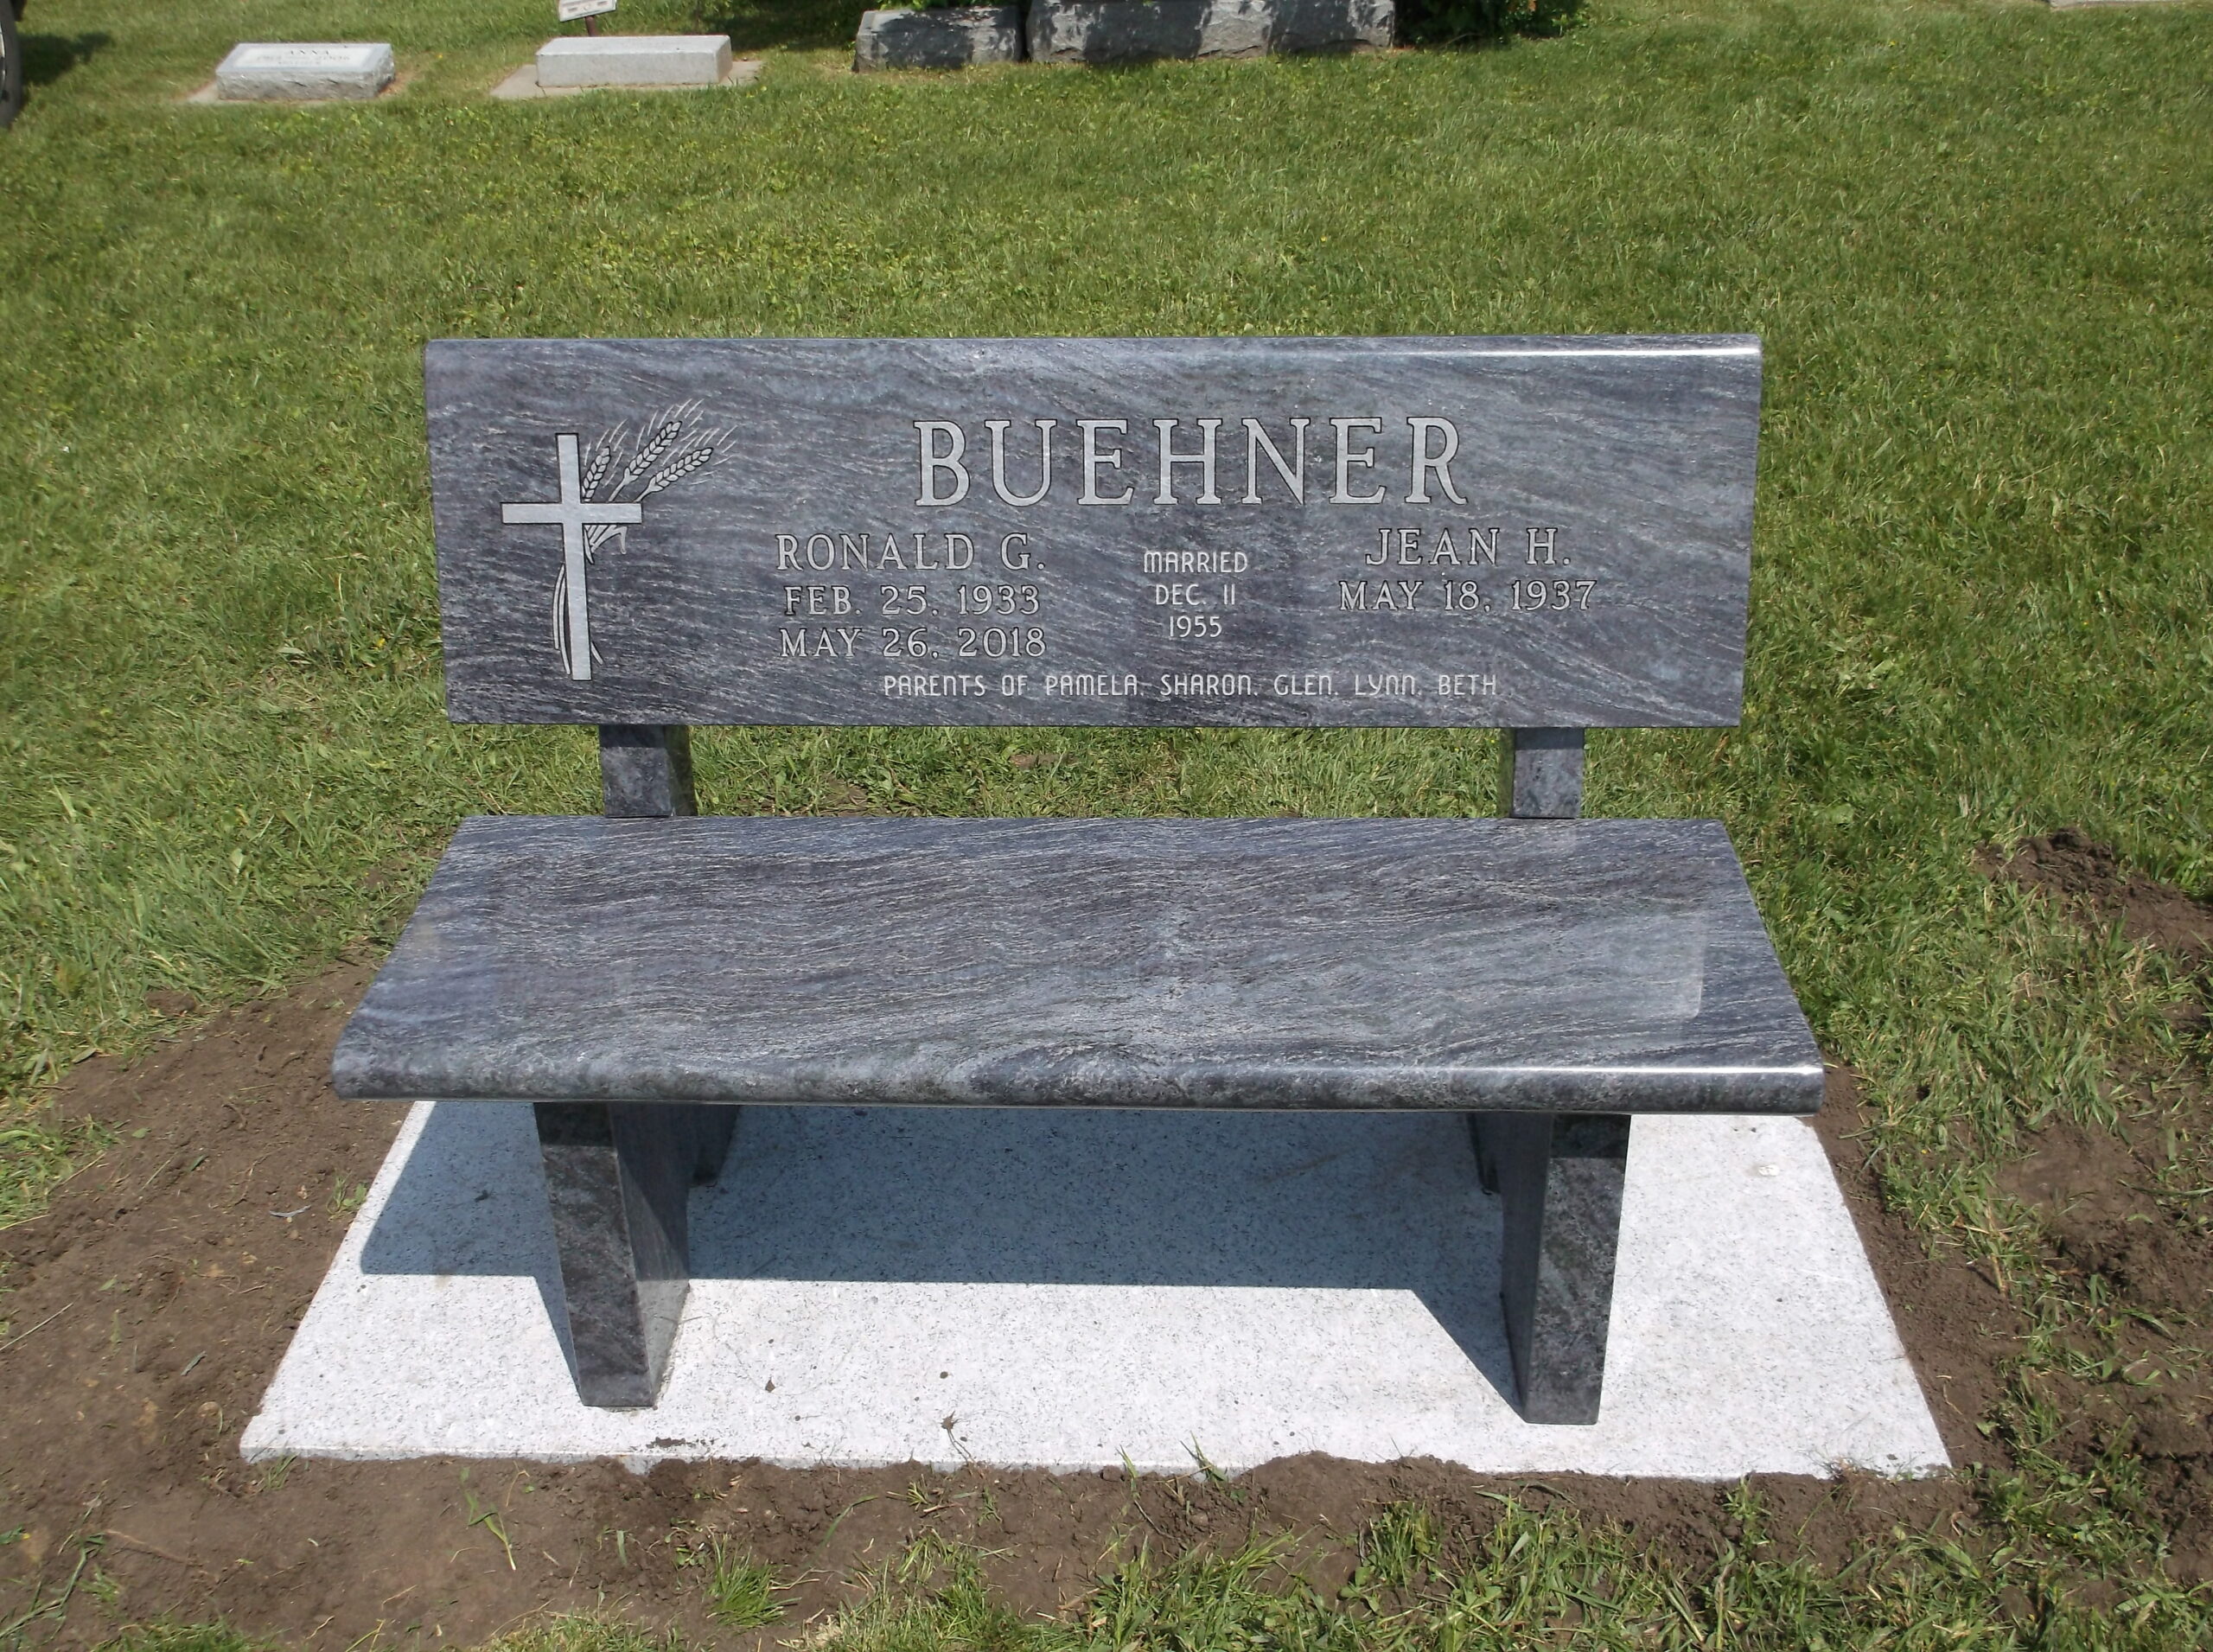 Buehner Bench